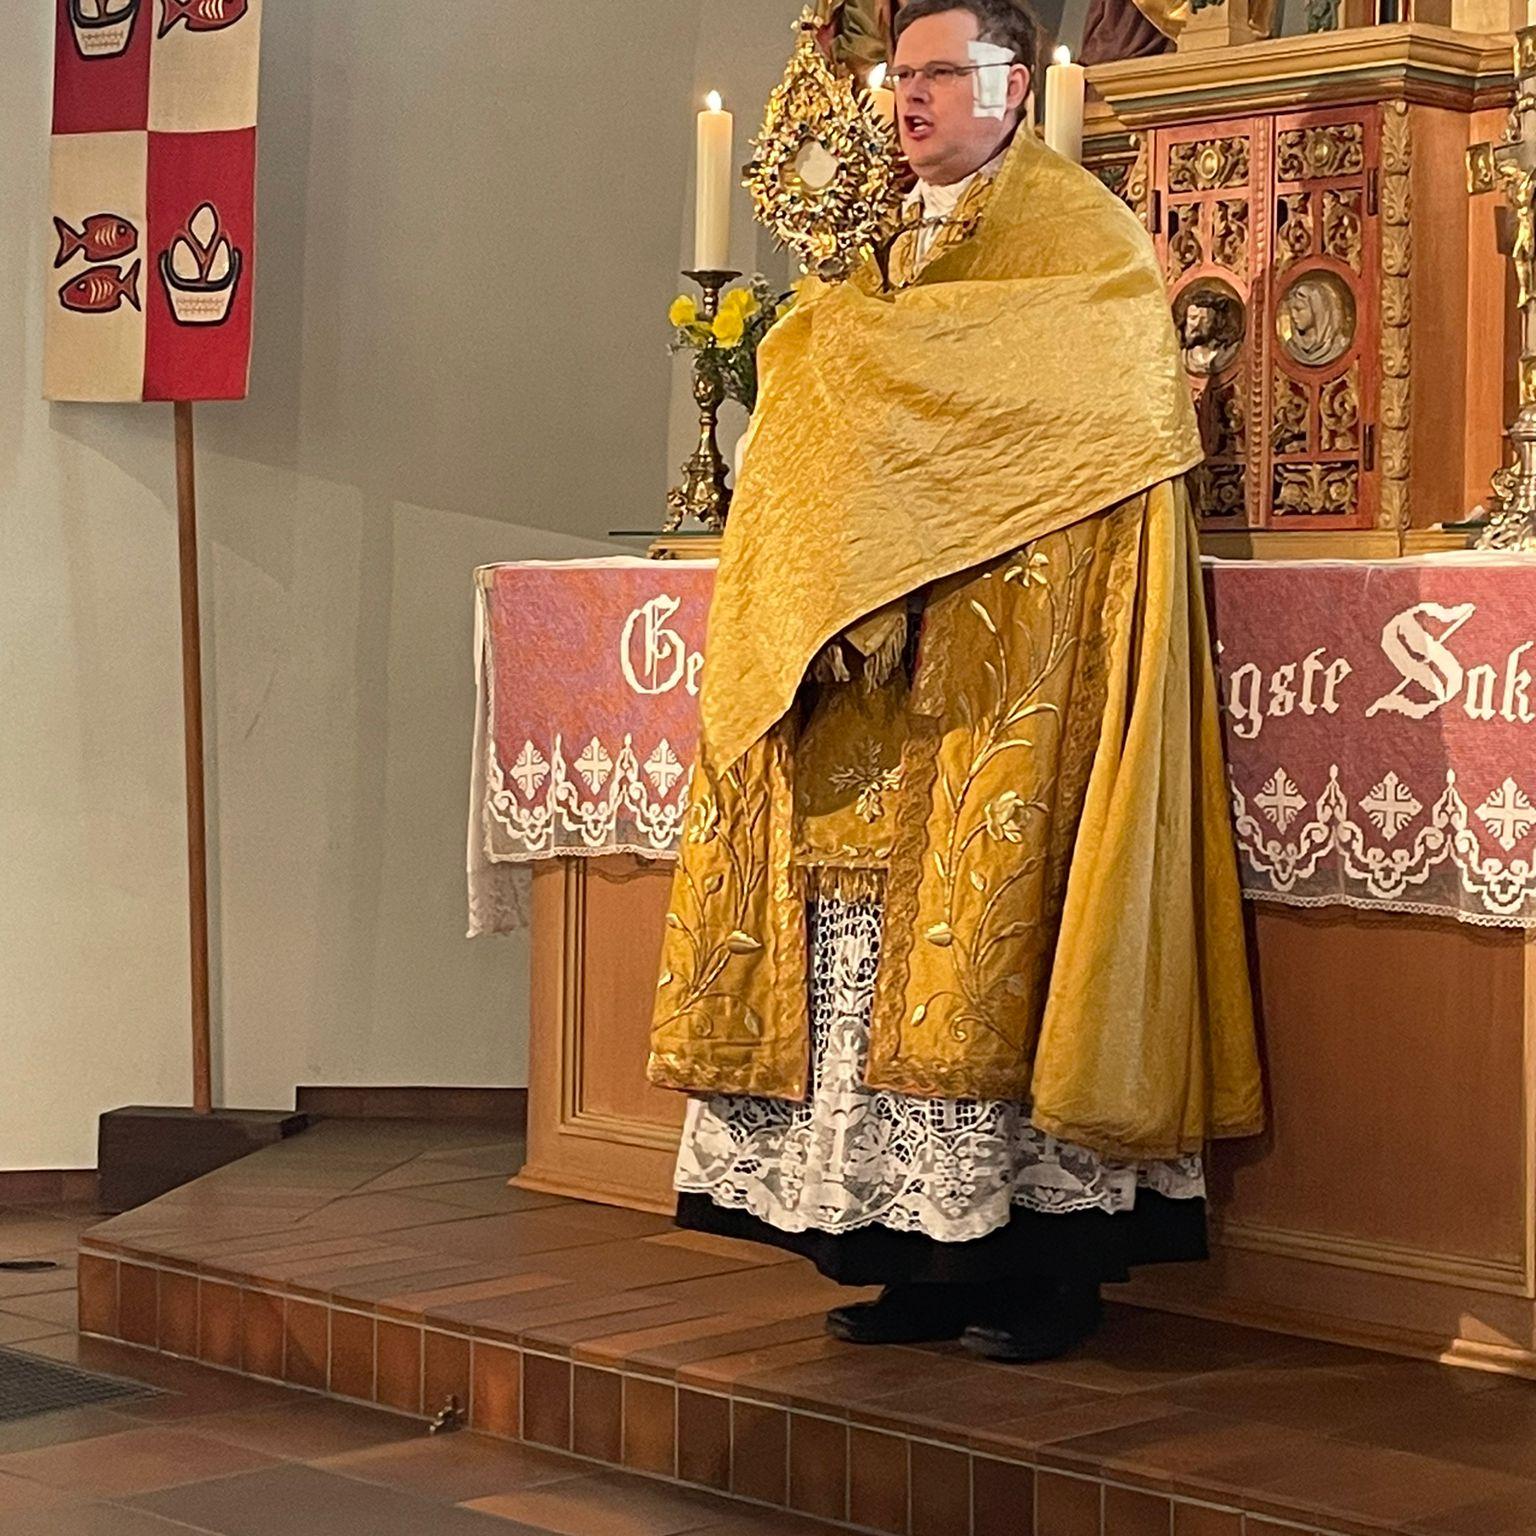 Pfarrer Christoph Hinke beim Großen Gebet in Oppershofen